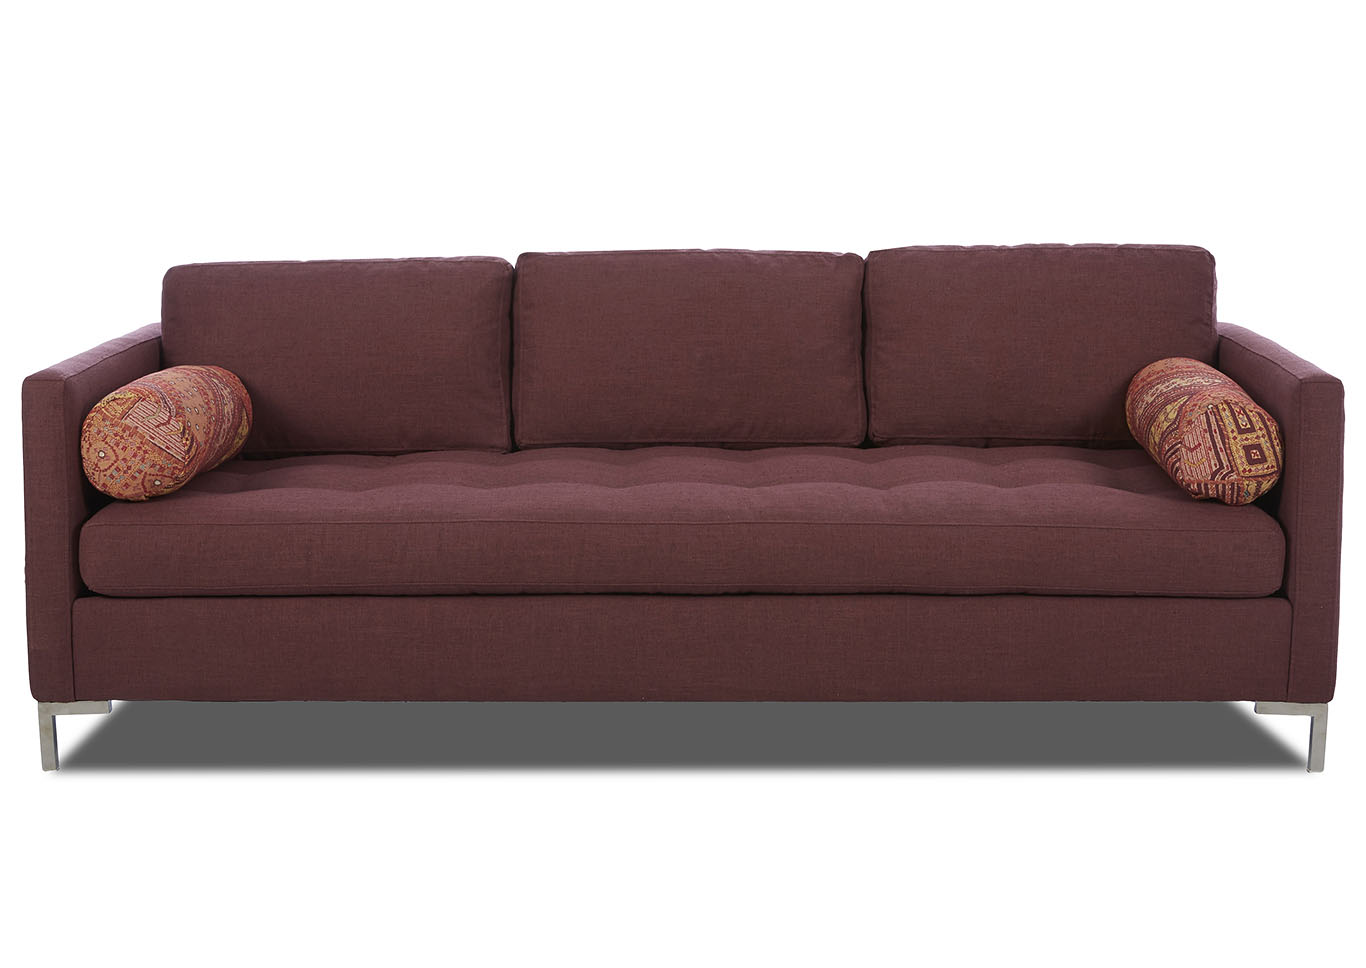 Uptown Zula Oxblood Stationary Fabric Sofa,Klaussner Home Furnishings